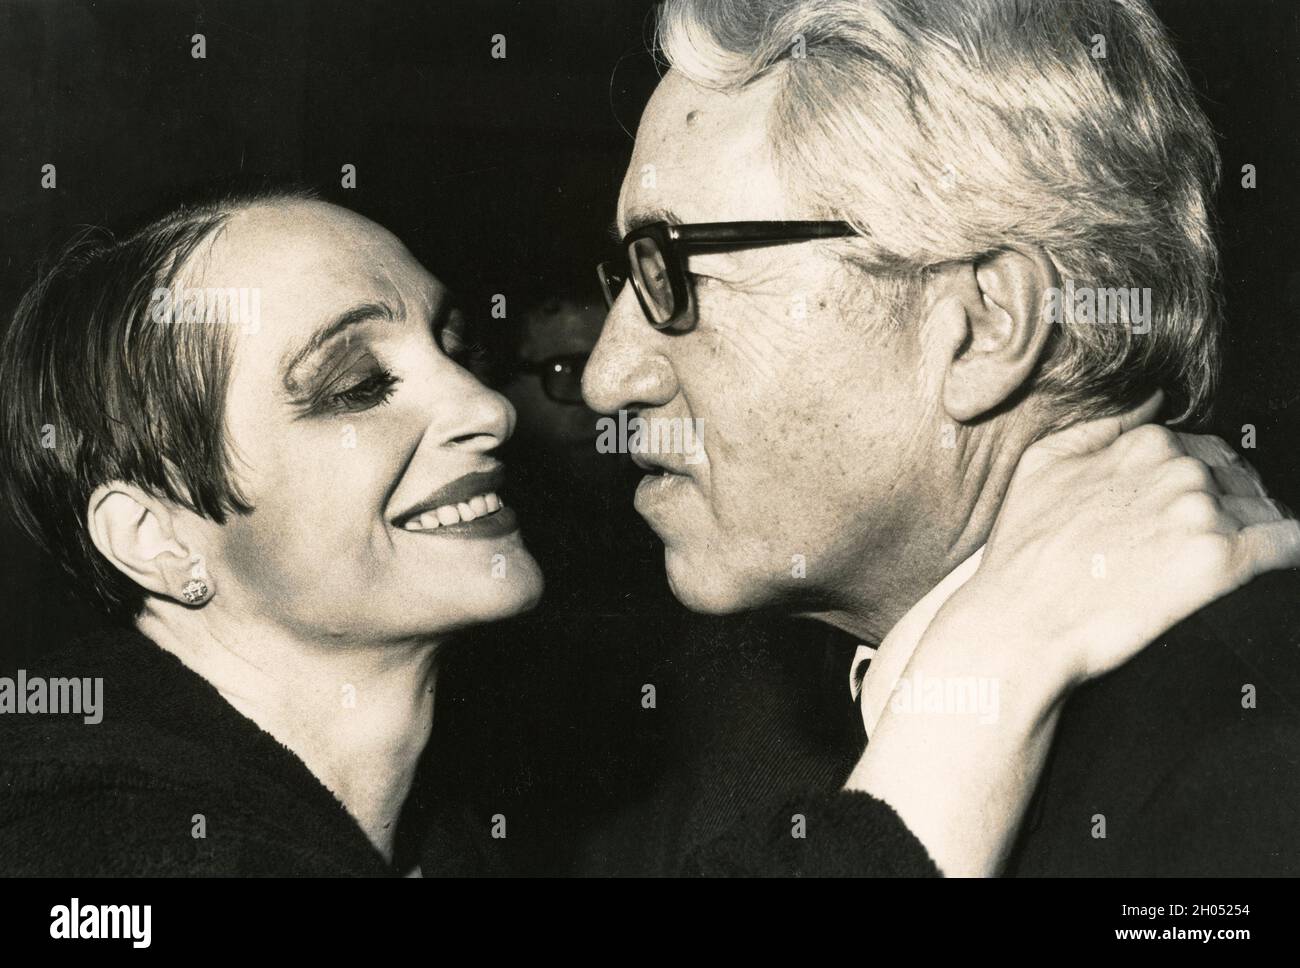 Adriana Asti y el dramaturgo Giuseppe Patroni Griffi, 1980s Foto de stock